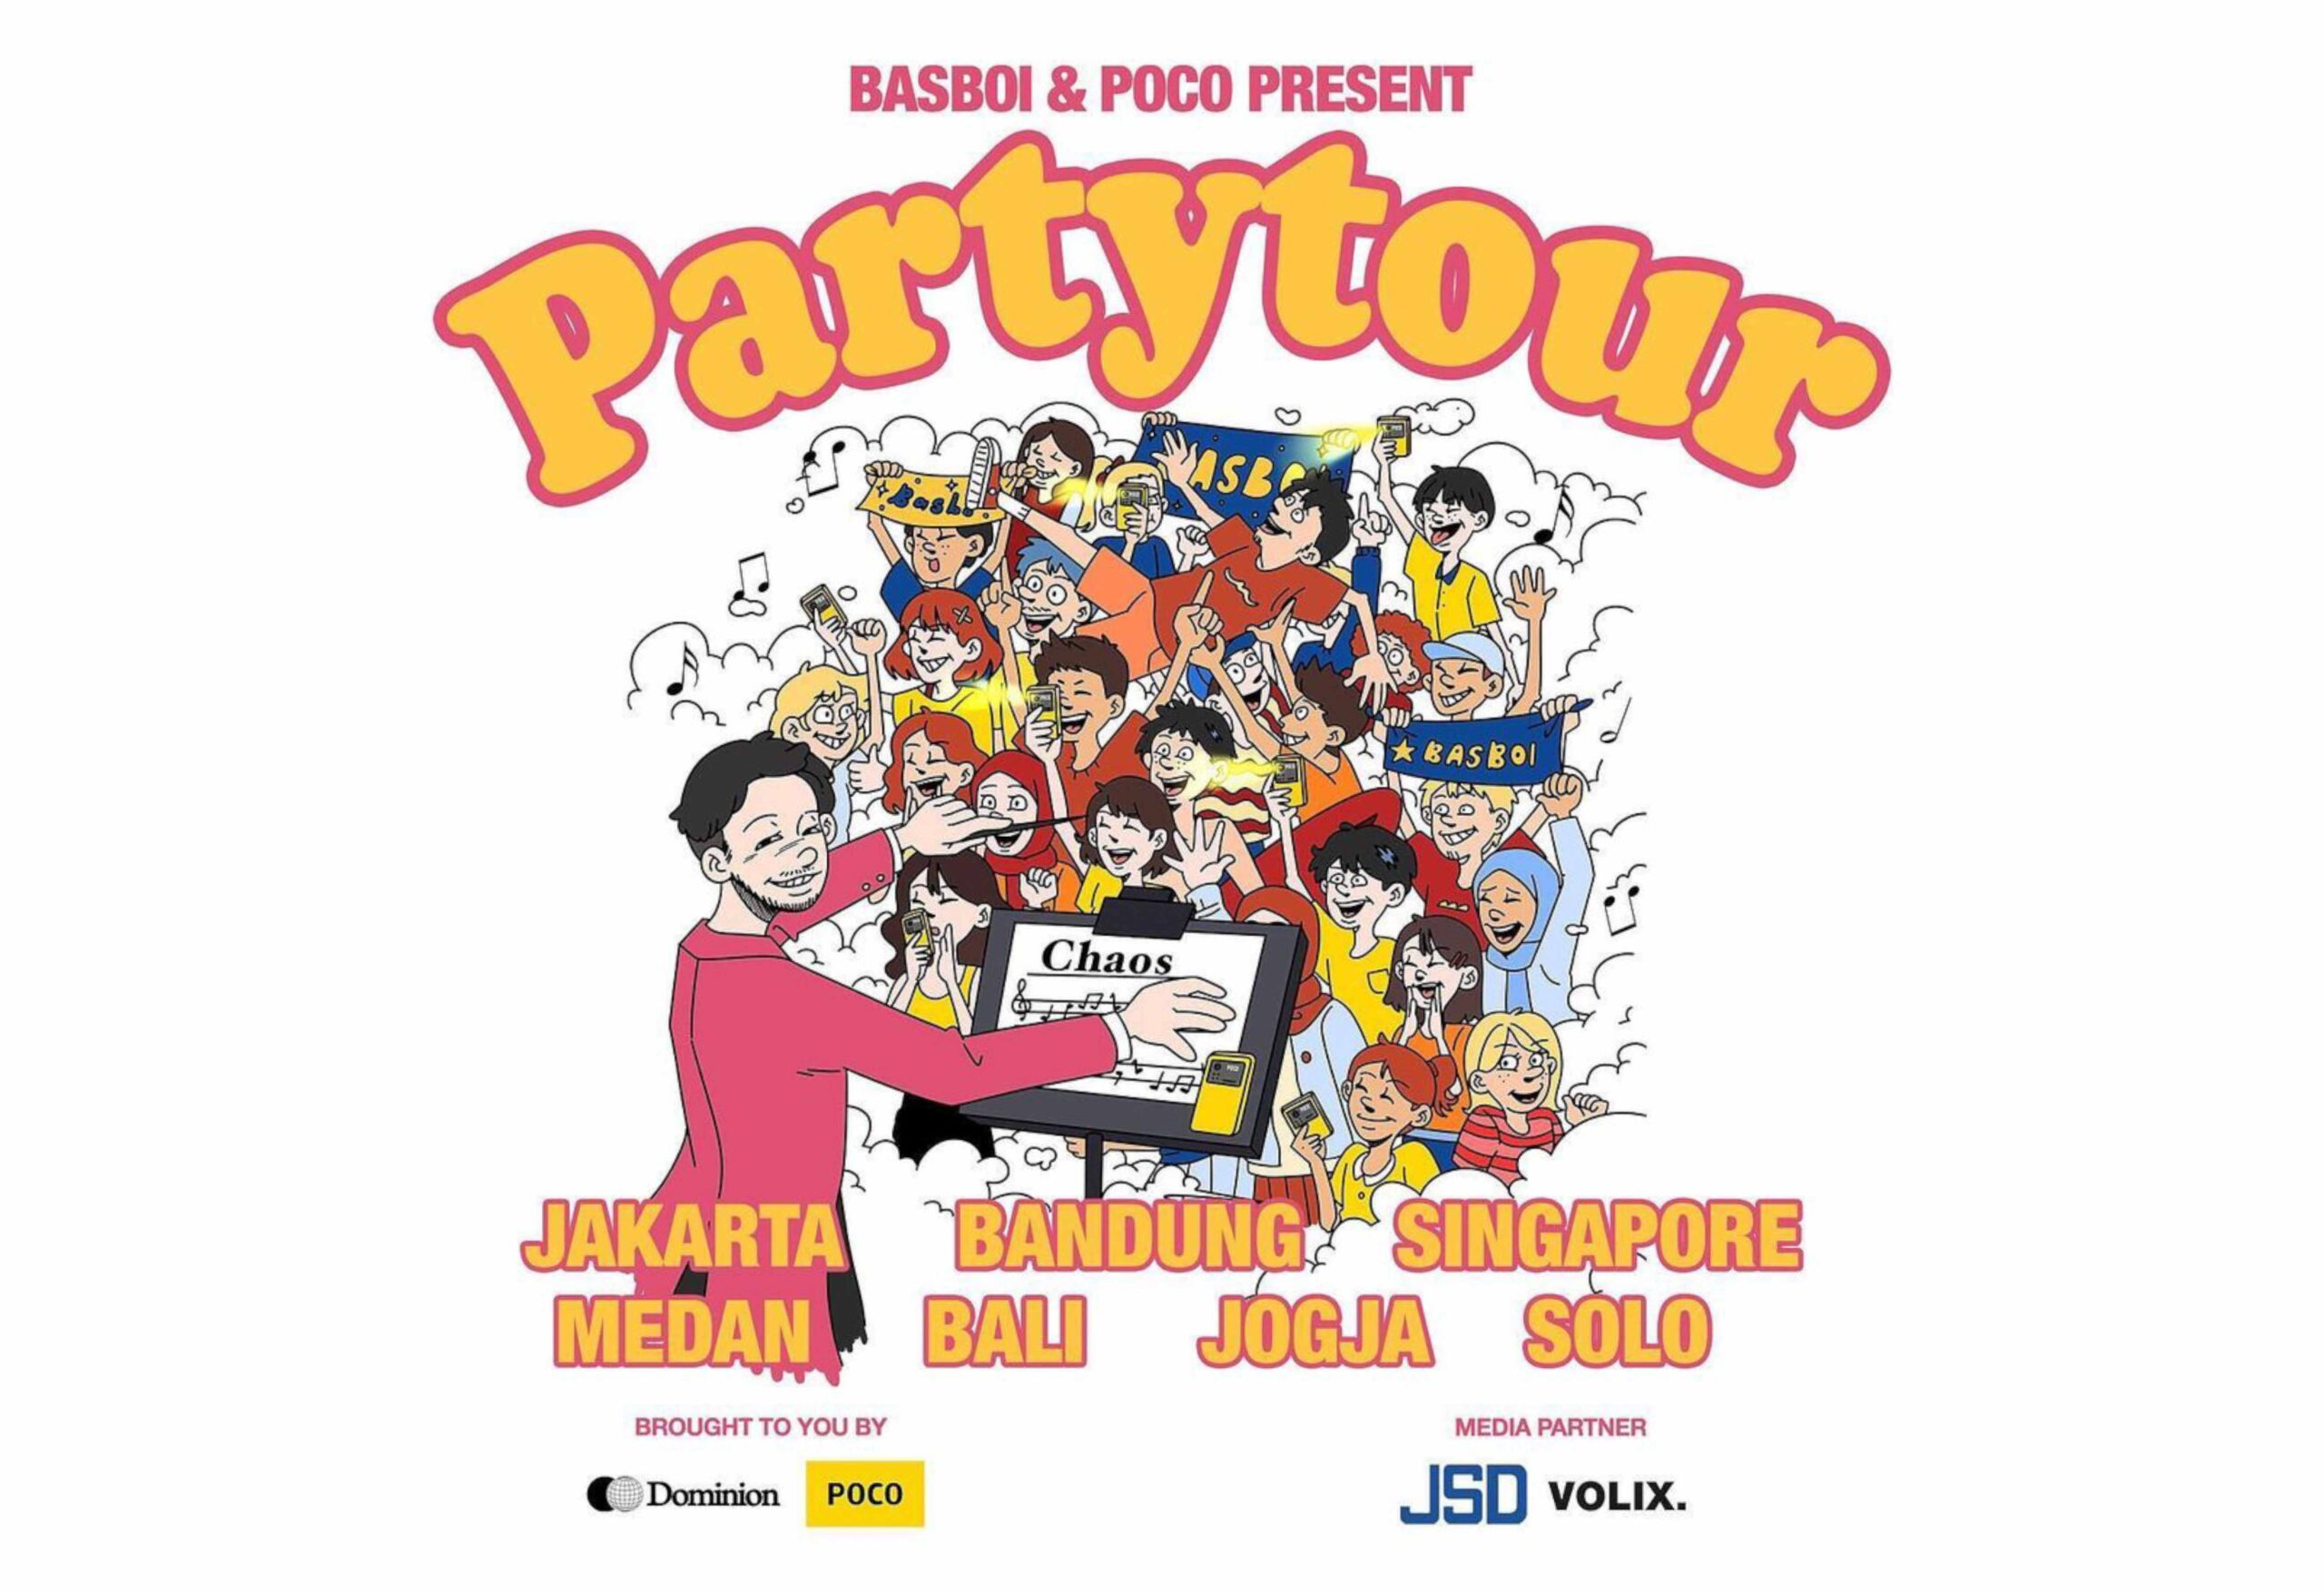 Basboi Announces "Partytour" Started This Weekend